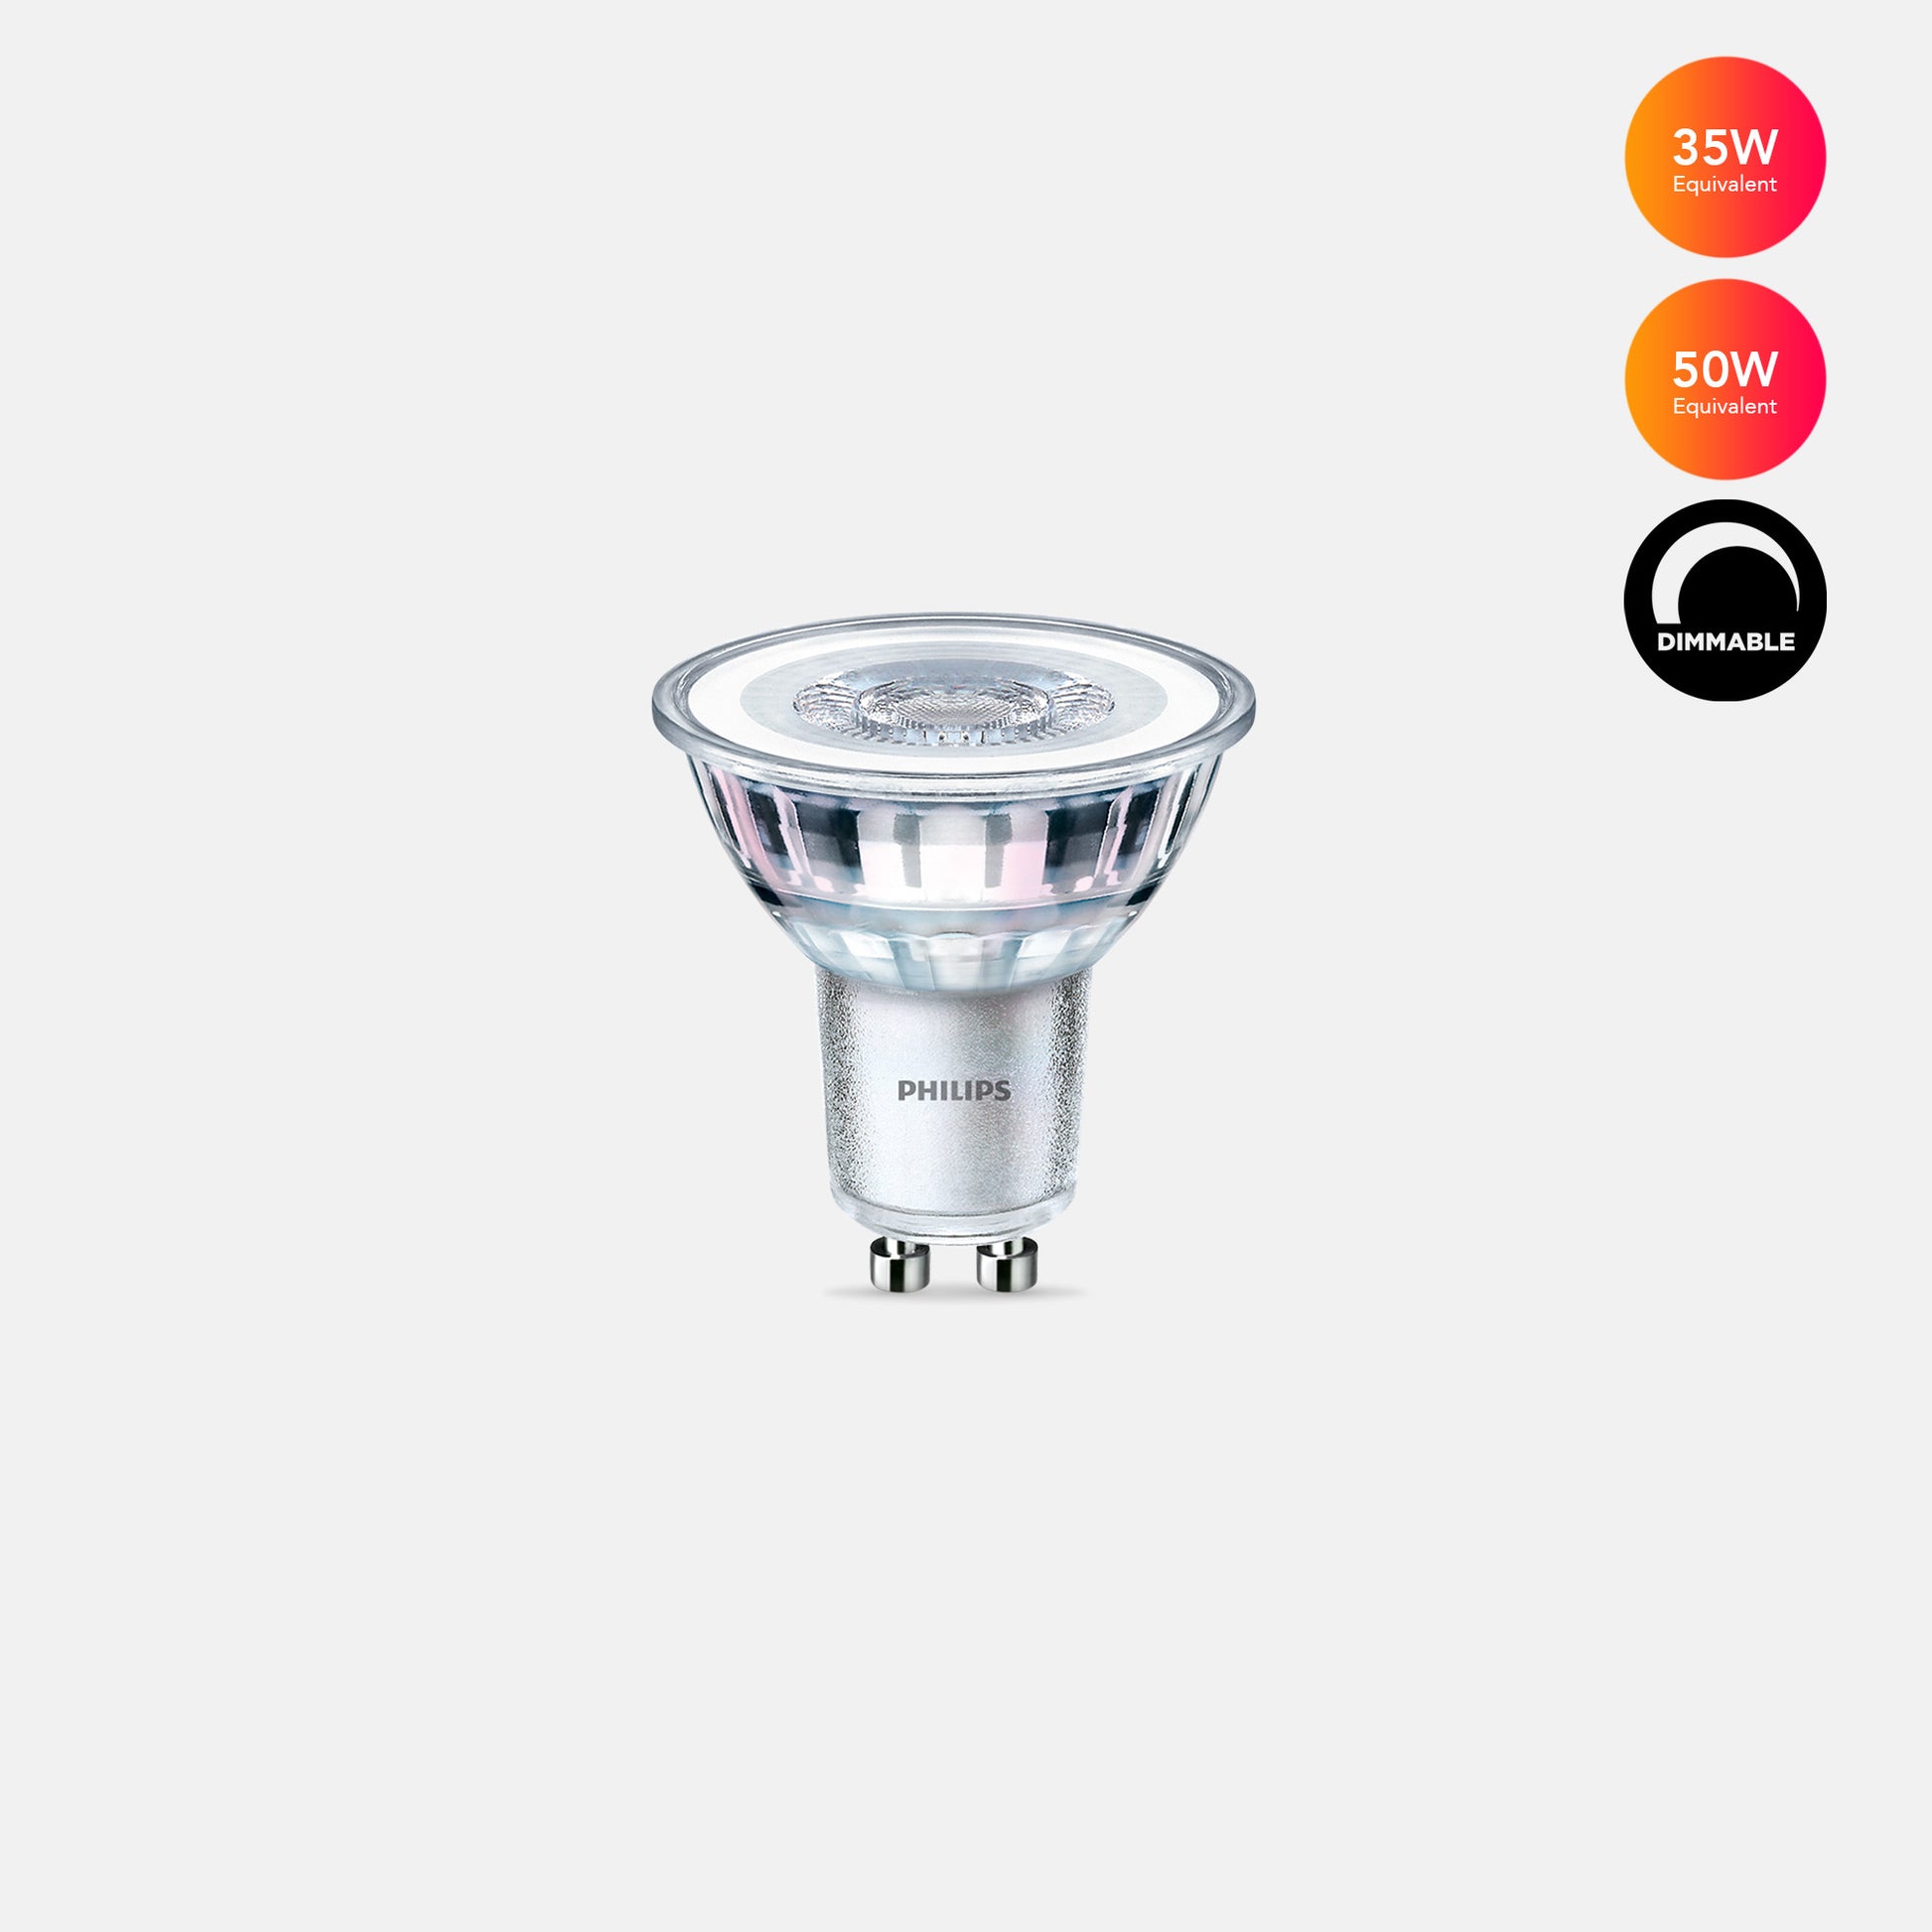 Buy Philips Lamps 2 LED bulbs, GU10 (Ø50mm) 3.5W